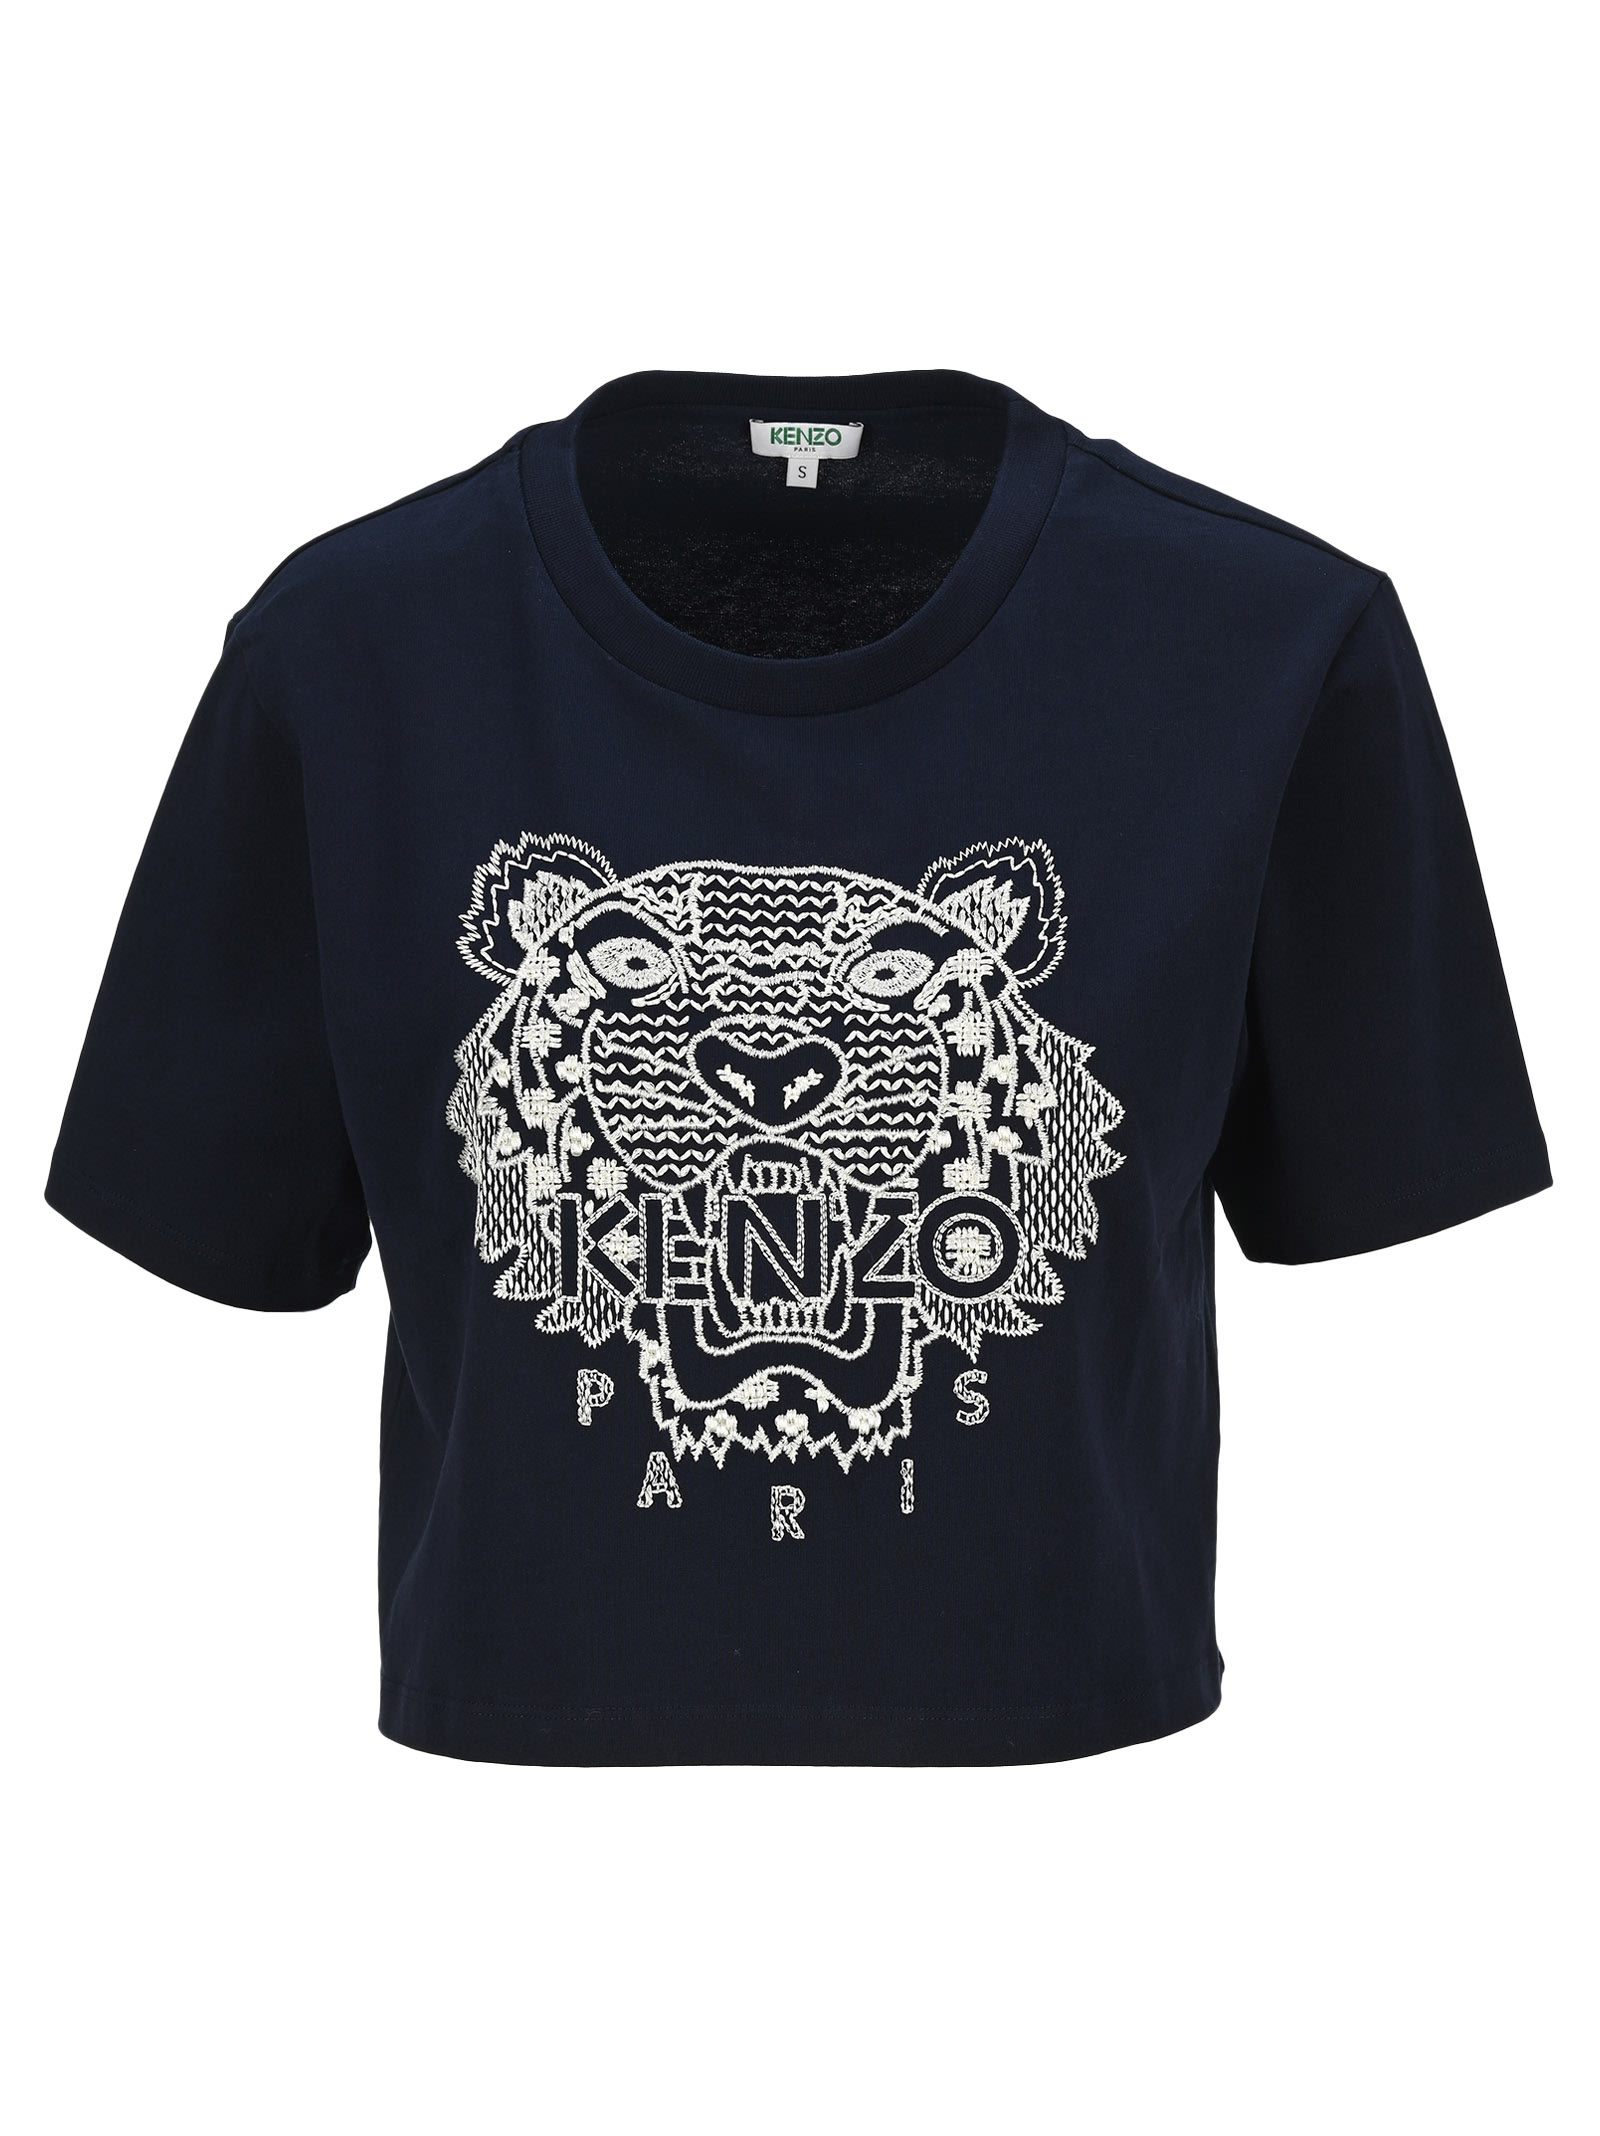 kenzo tiger shirt sale